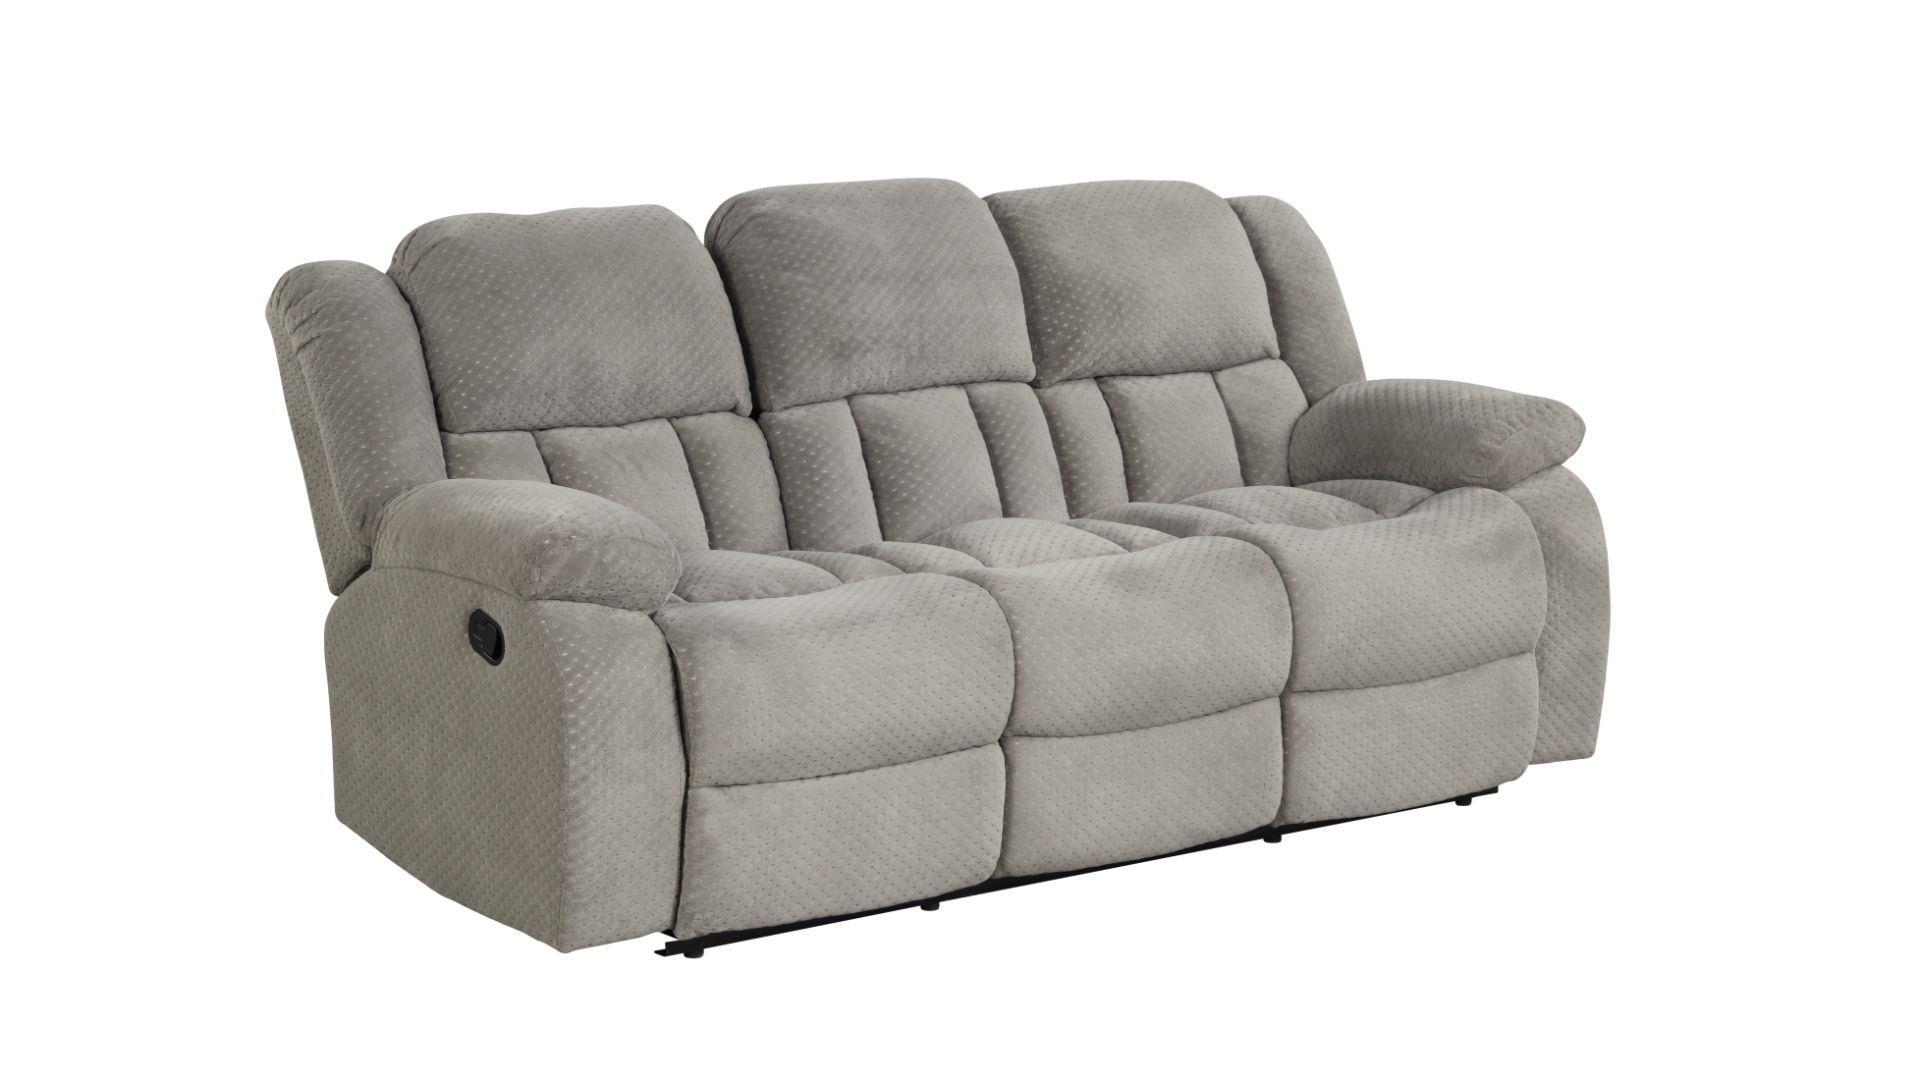 Galaxy Home Furniture ARMADA Ice Gray Recliner Sofa